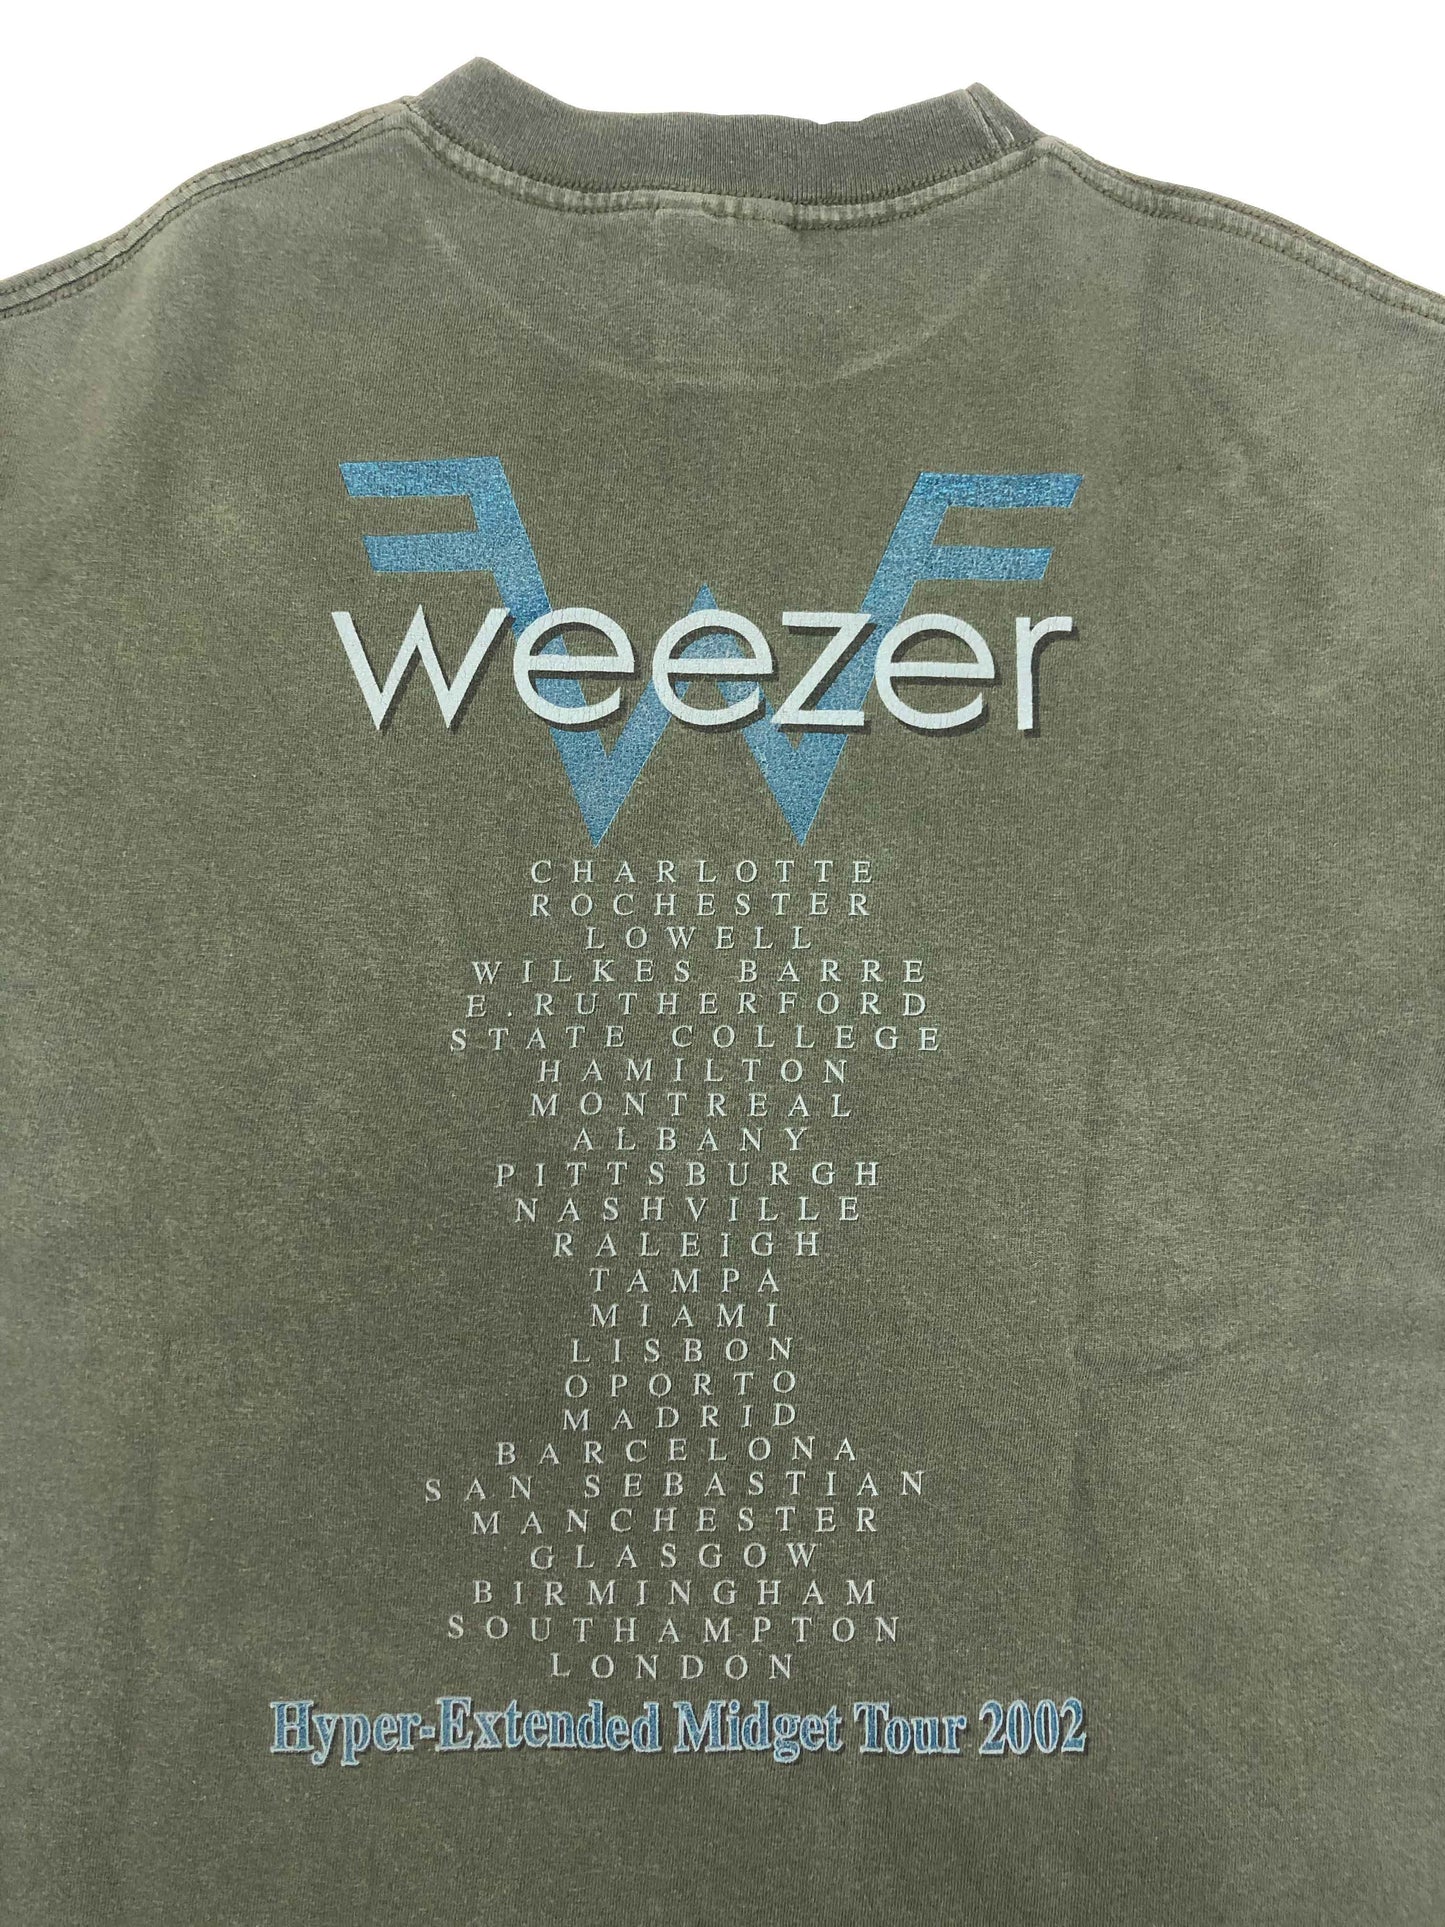 2002 WEEZER "Hyper-Extended Midget" Tour Shirt - Two Vault Vintage